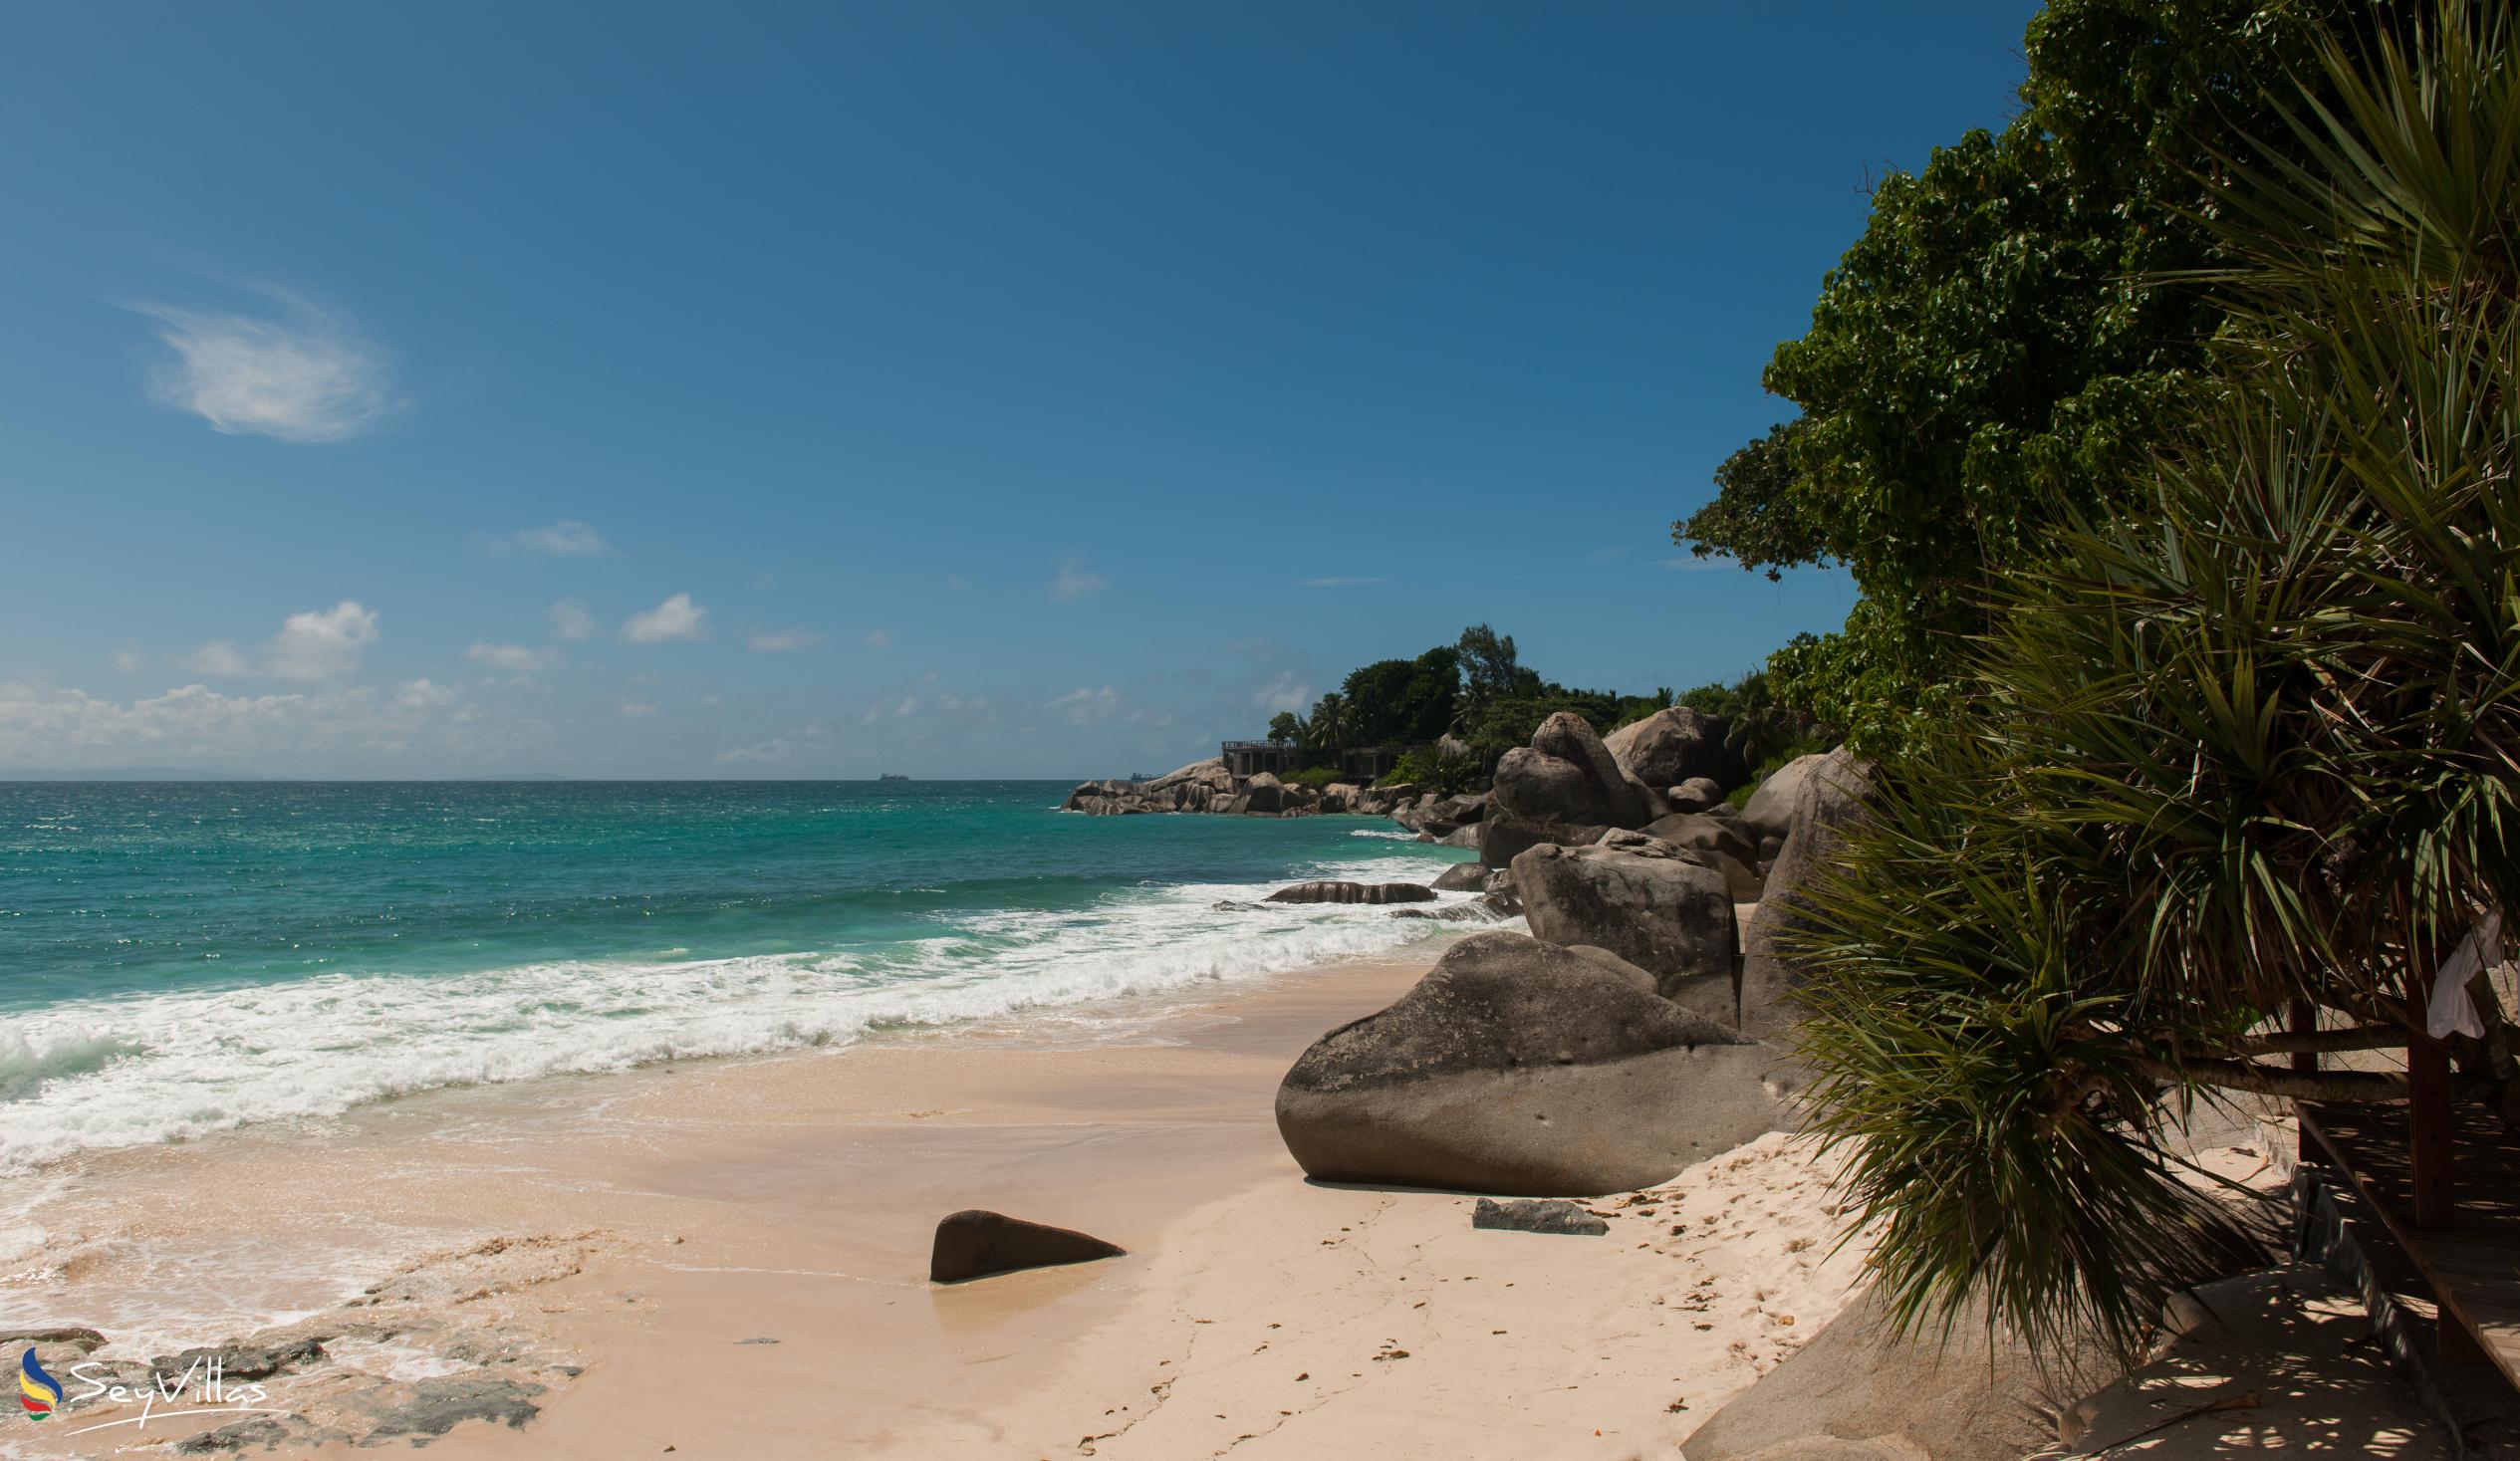 Photo 73: Carana Beach Hotel - Location - Mahé (Seychelles)